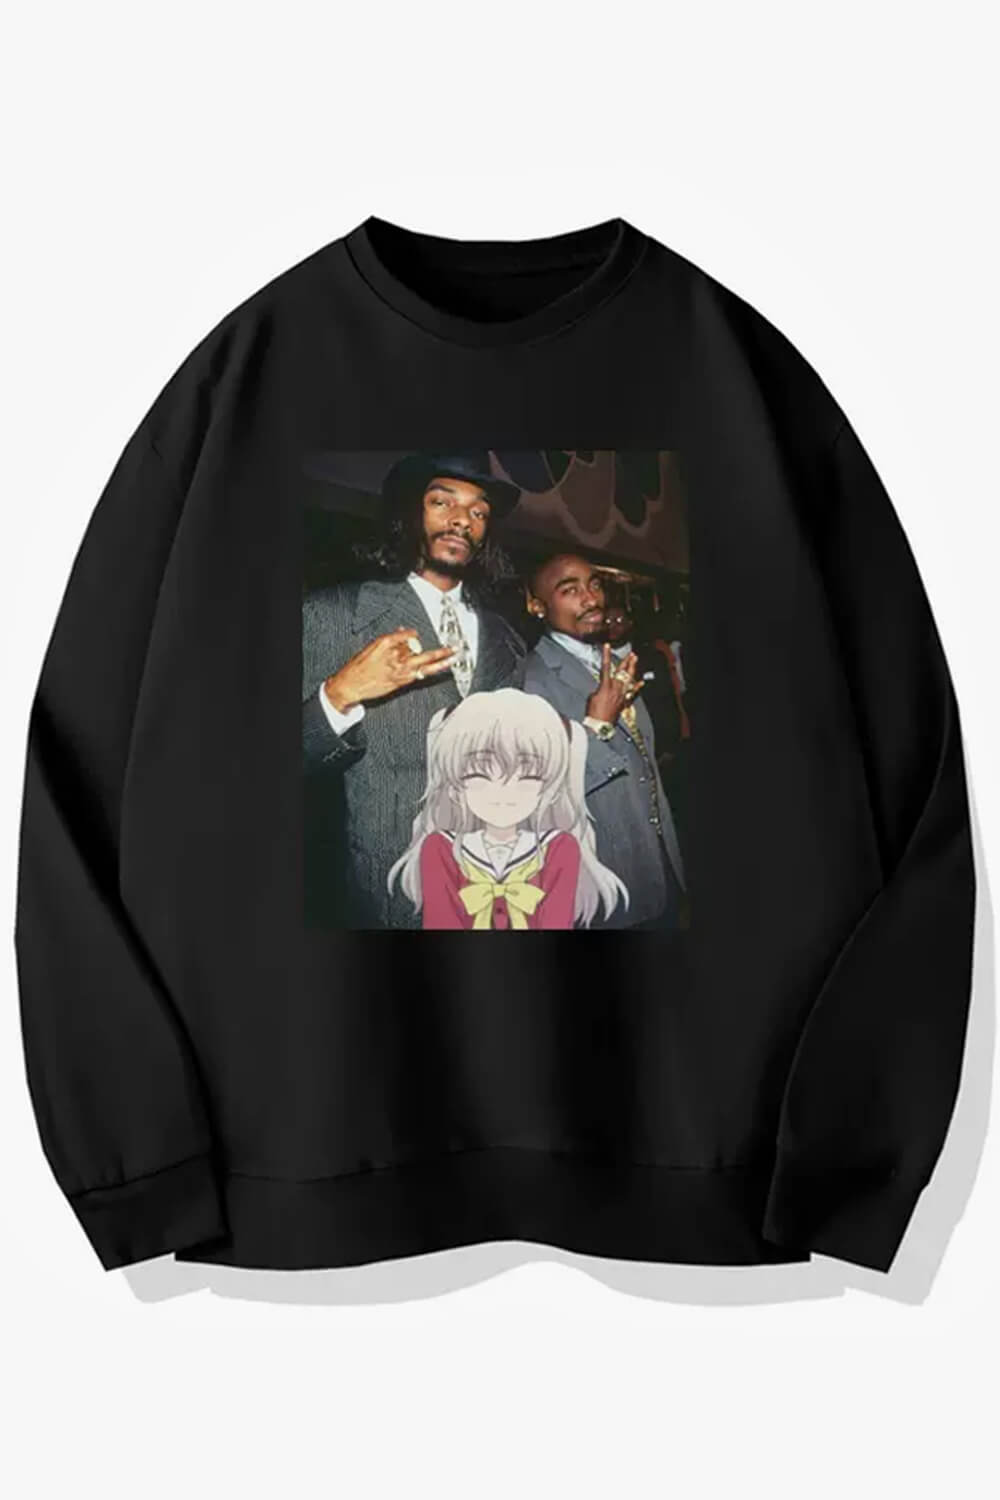 Snoop Dogg Tupac and Cute Anime Girl Sweatshirt Animecore